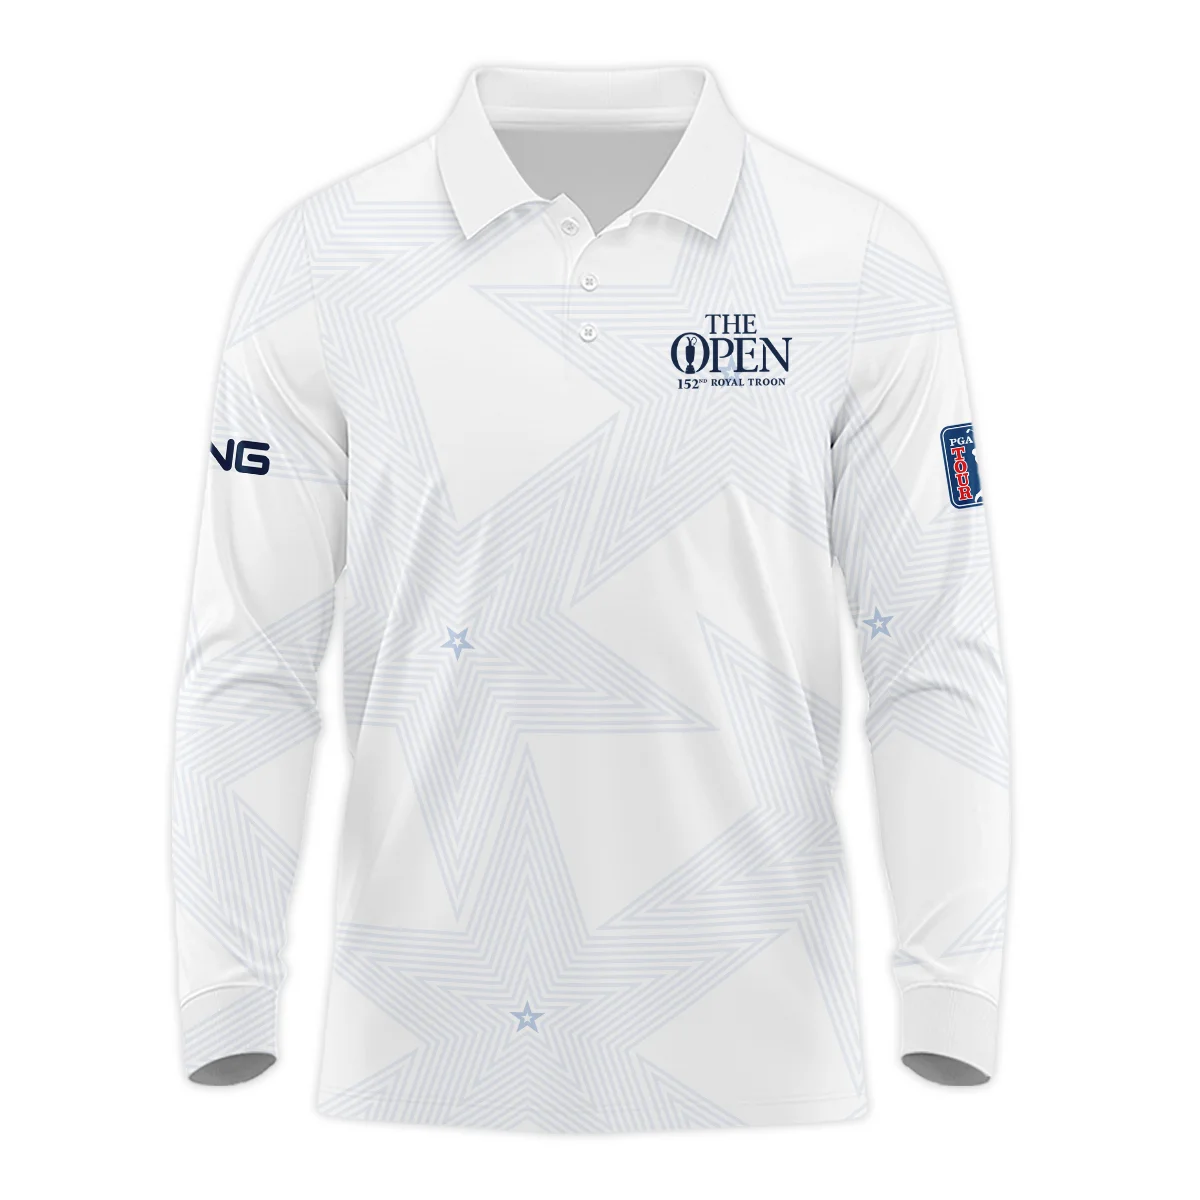 152nd The Open Championship Golf Ping Sleeveless Jacket Stars White Navy Golf Sports All Over Print Sleeveless Jacket